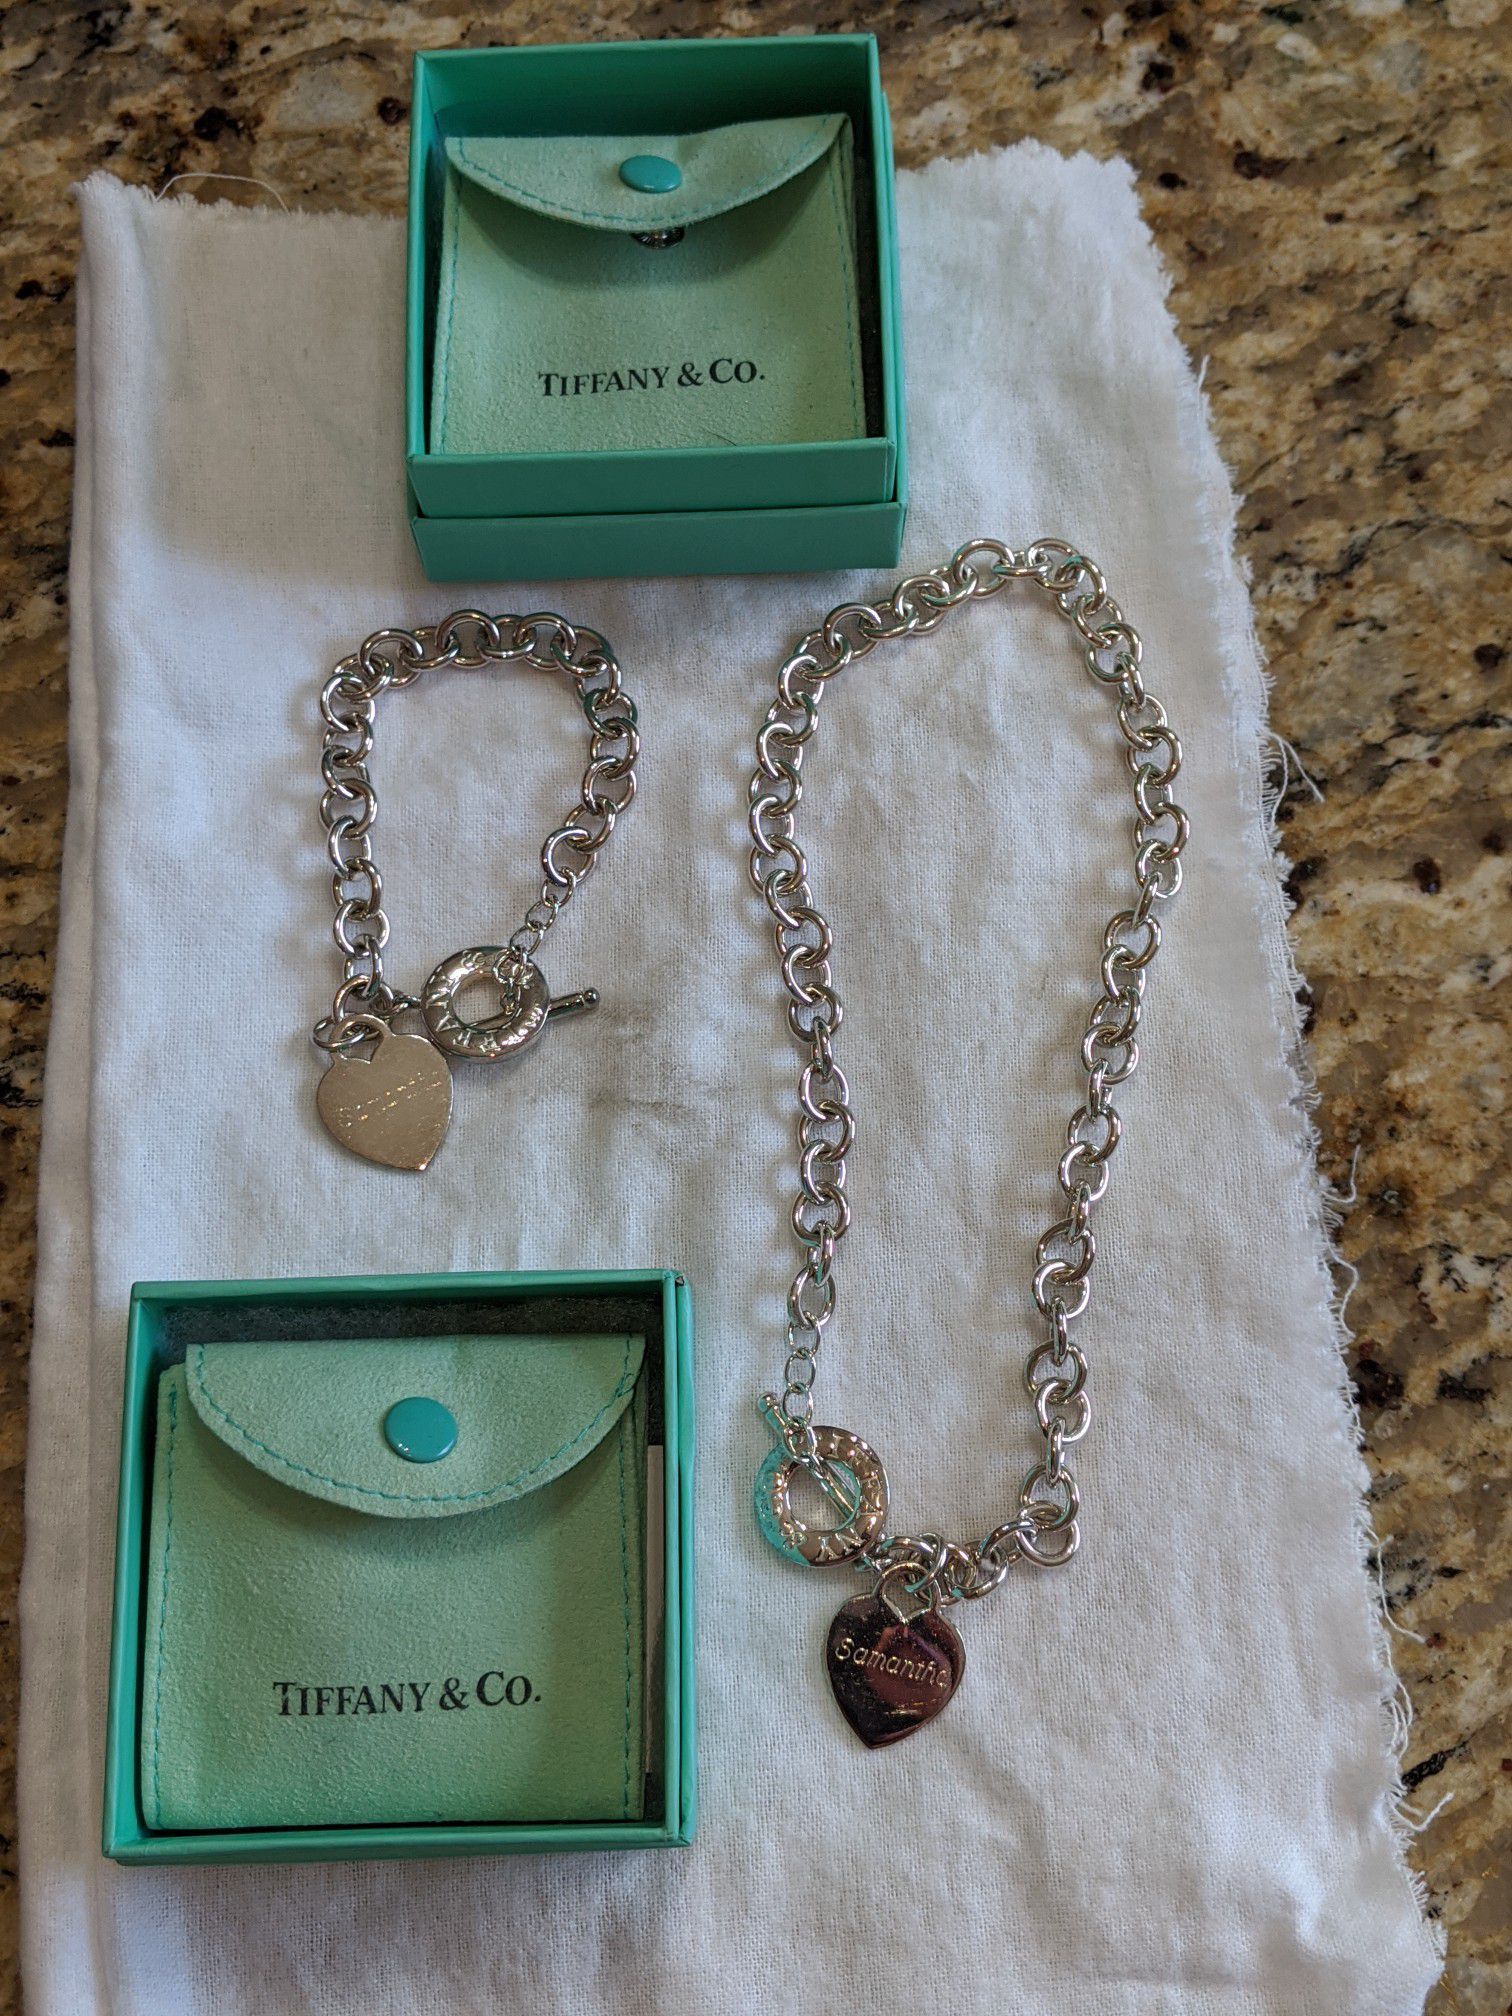 Tiffany and company necklace bracelet set used